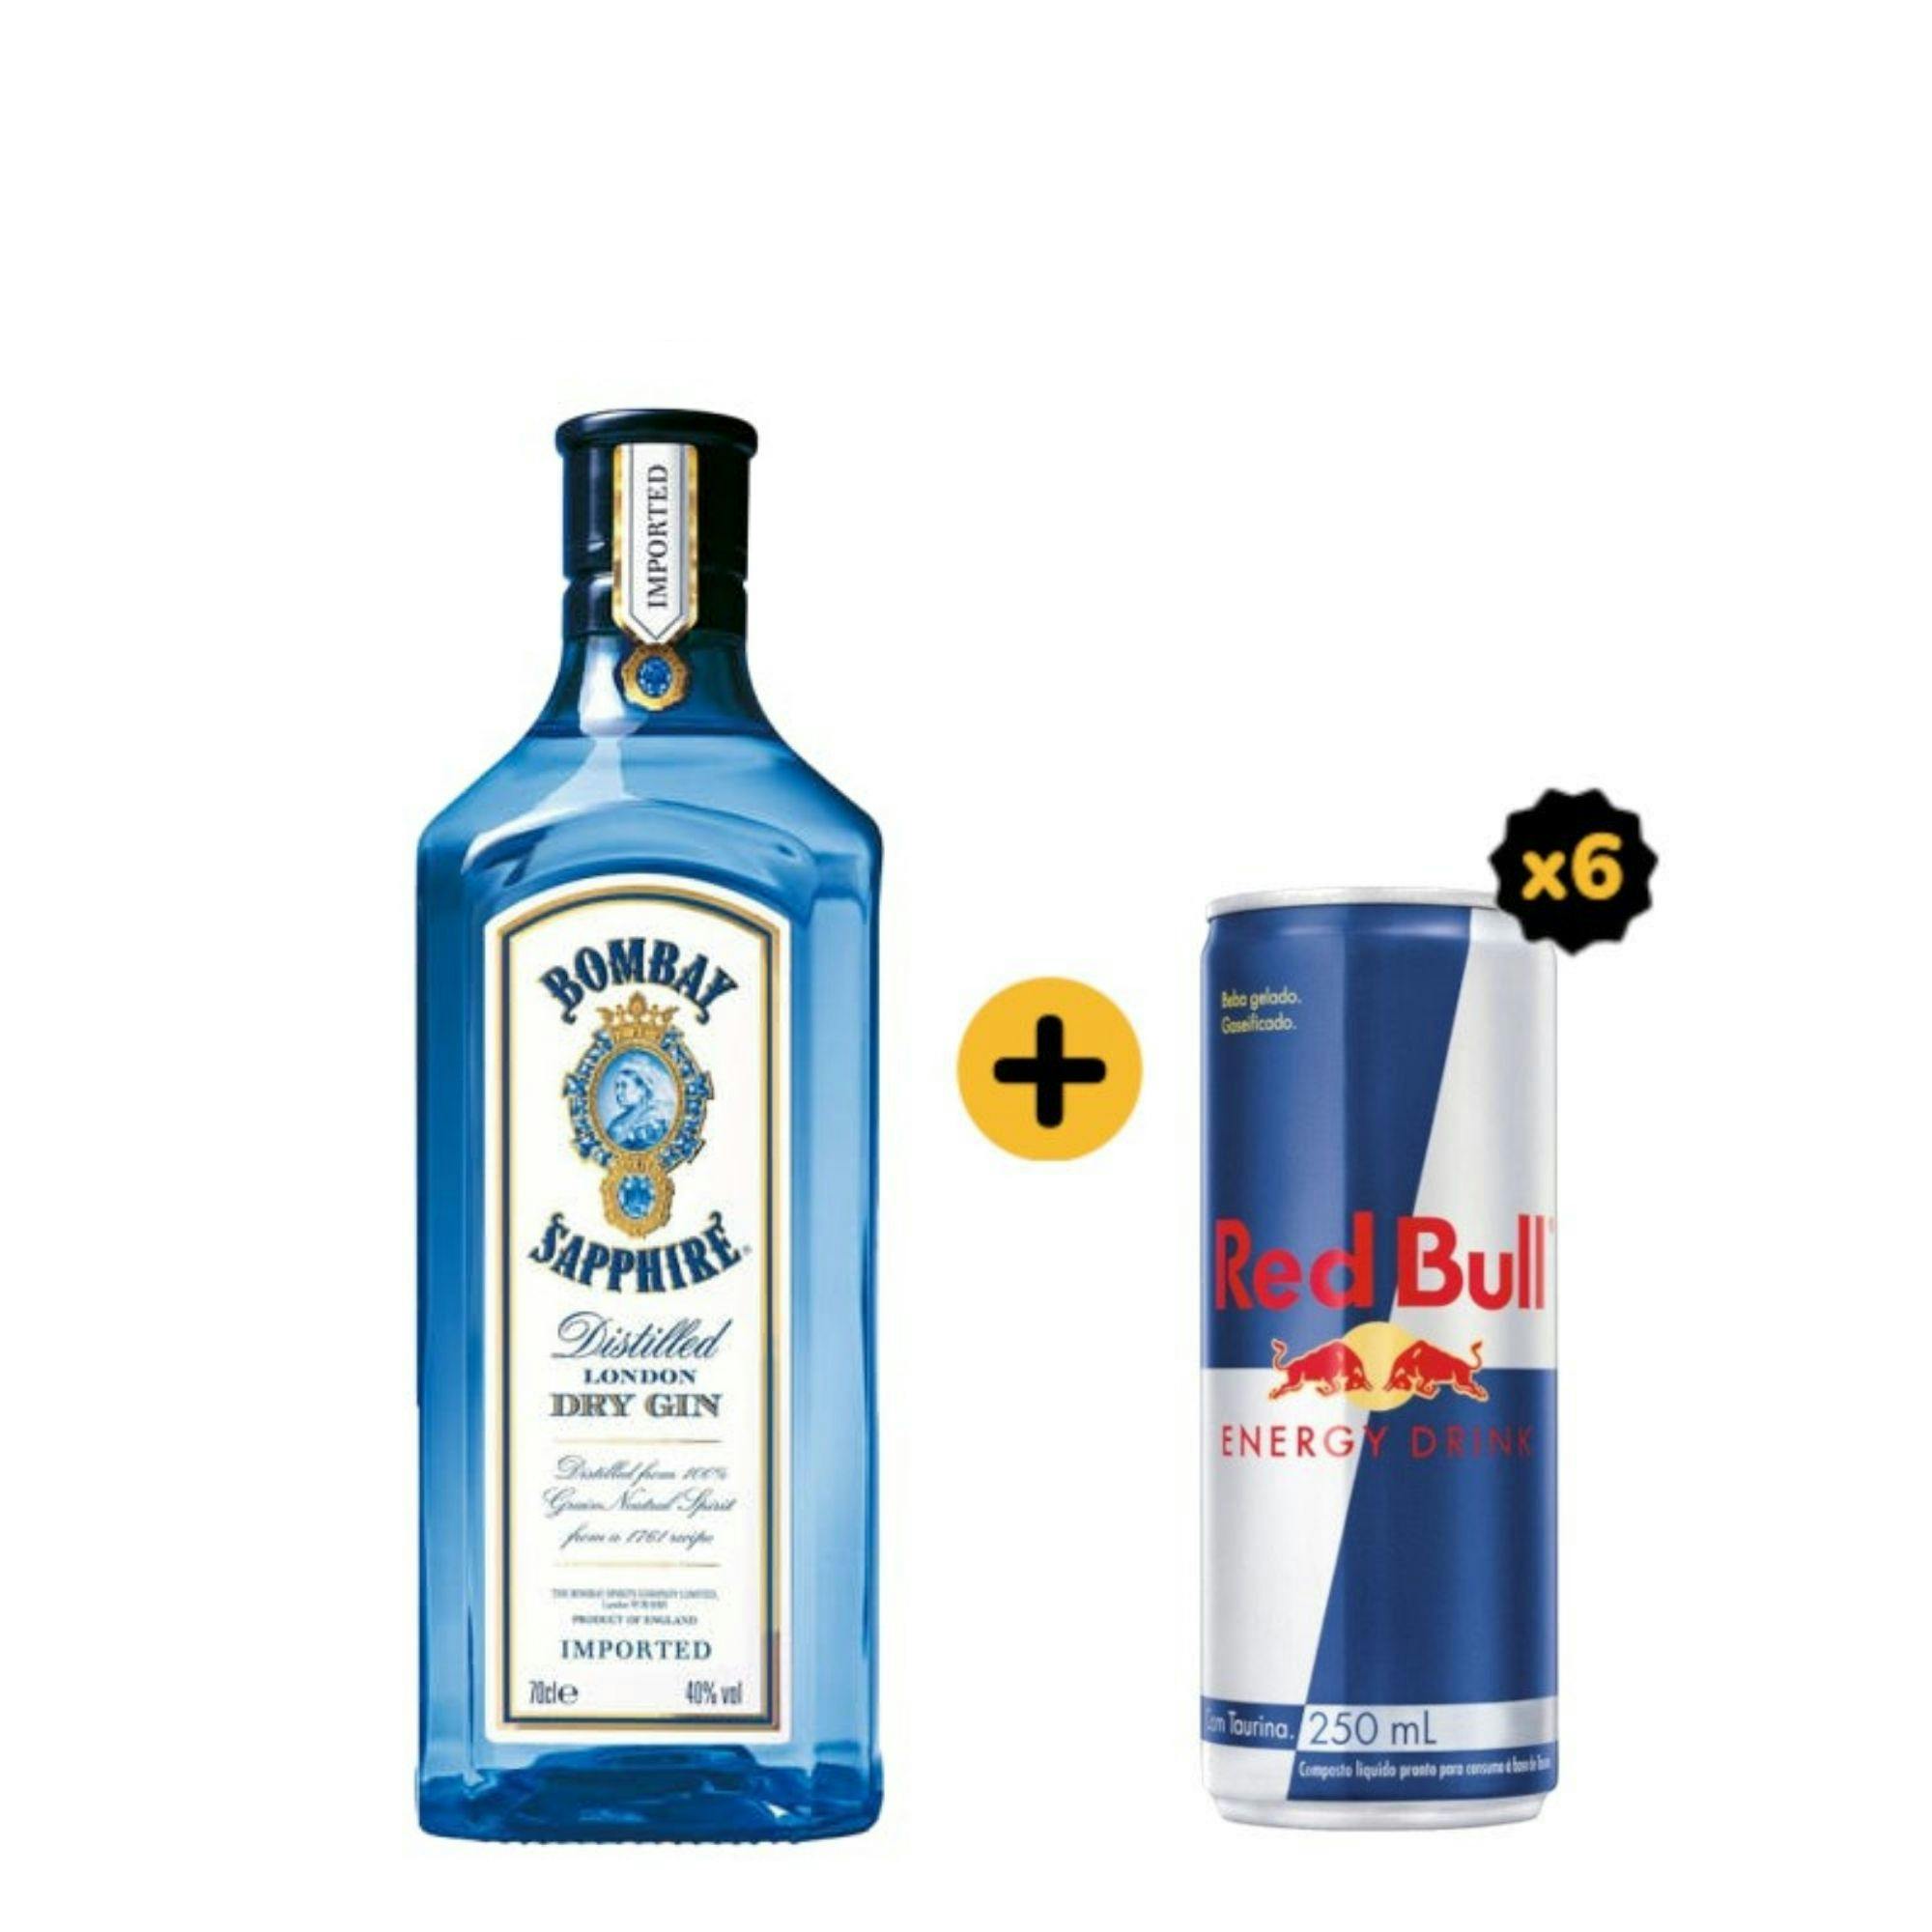 Combo Bombay + Red Bull (1 Gin Bombay Sapphire 750ml + 6 Red Bull Energy Drink 250ml)